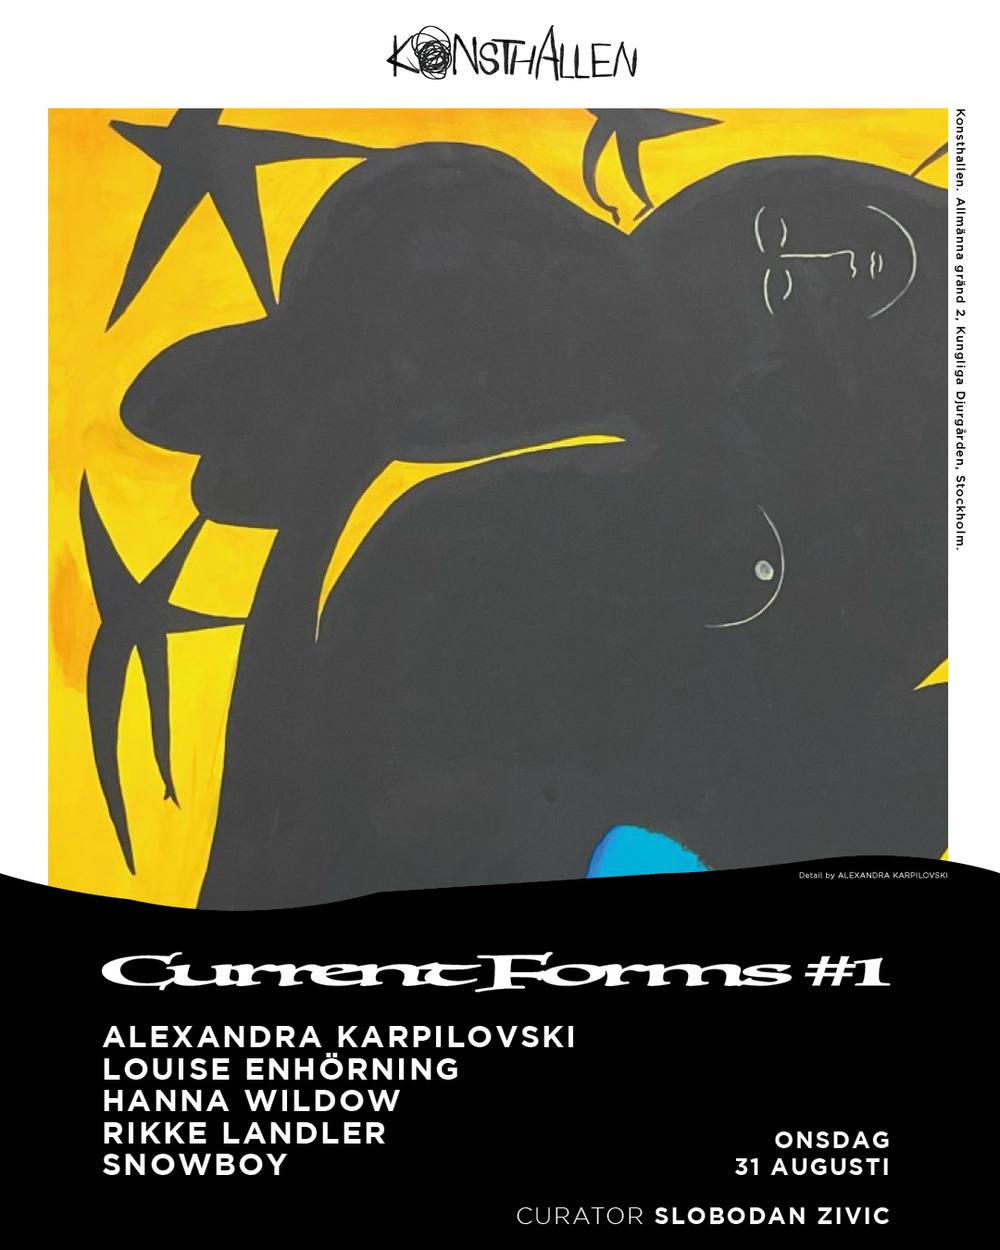 Current Forms #1 Konsthallen ALEXANDRA KARPILOVSKI